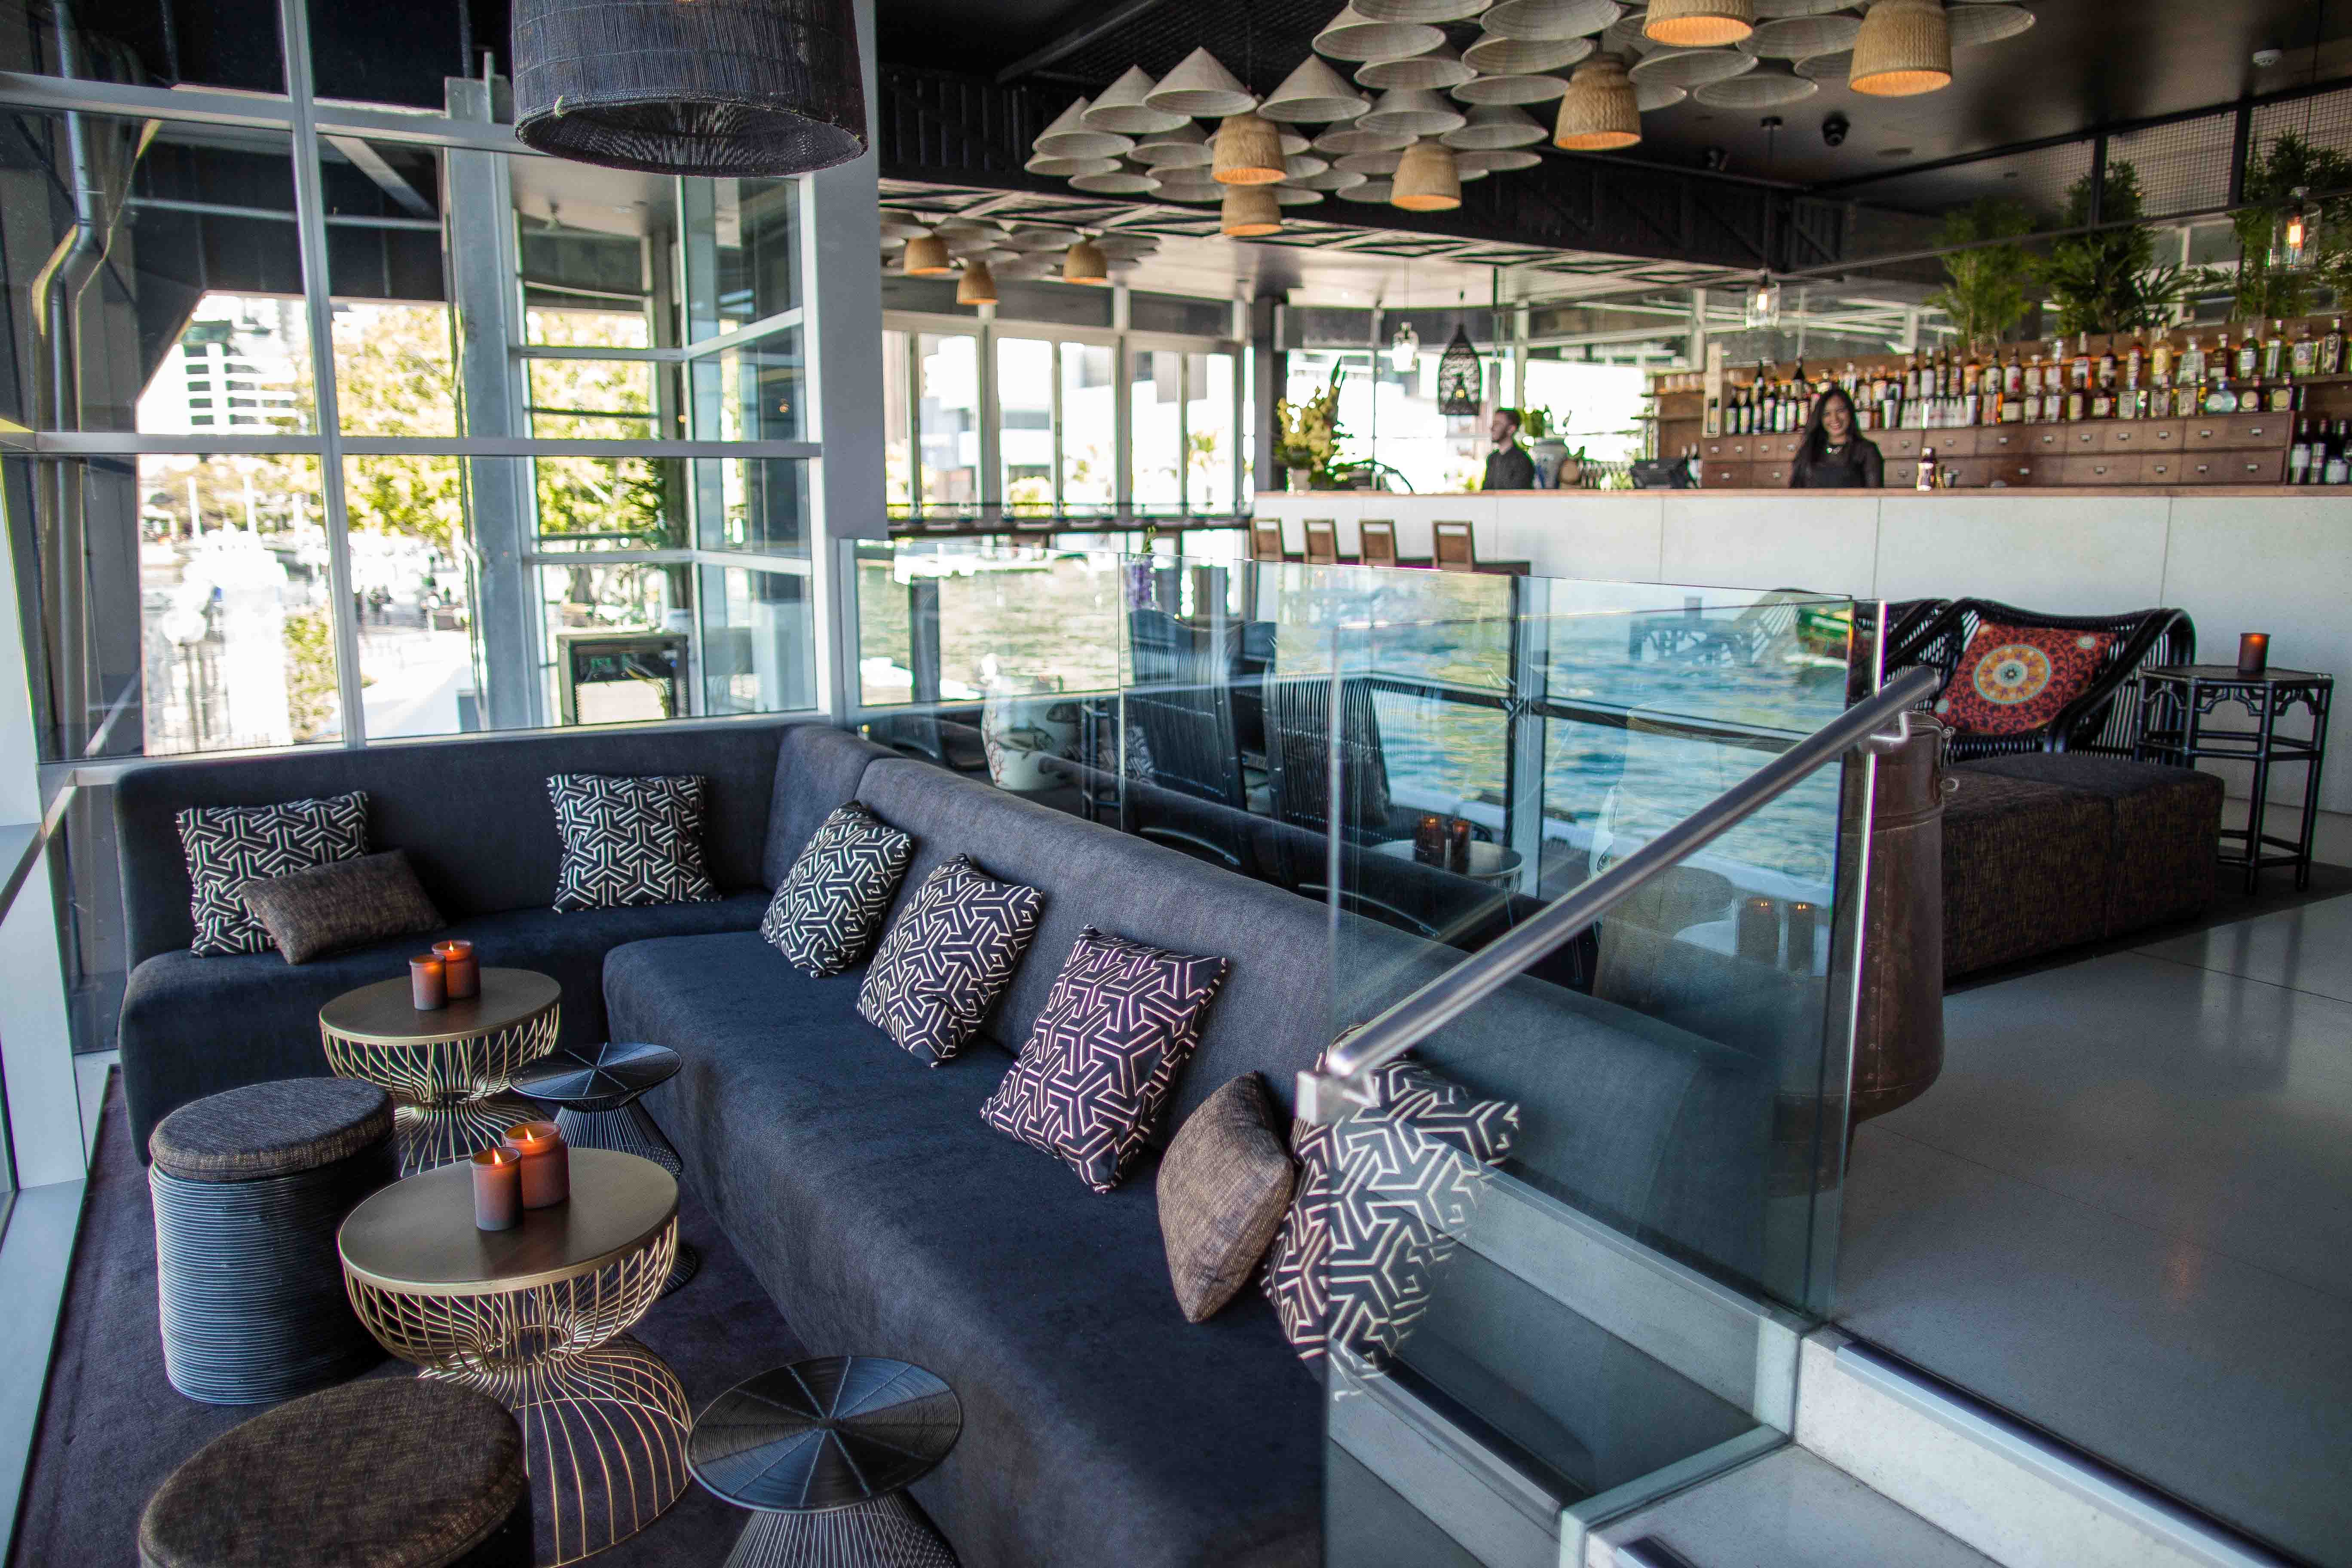 Have a look inside the new Cruise Bar, Sydney - 5472 x 3648 jpeg 918kB